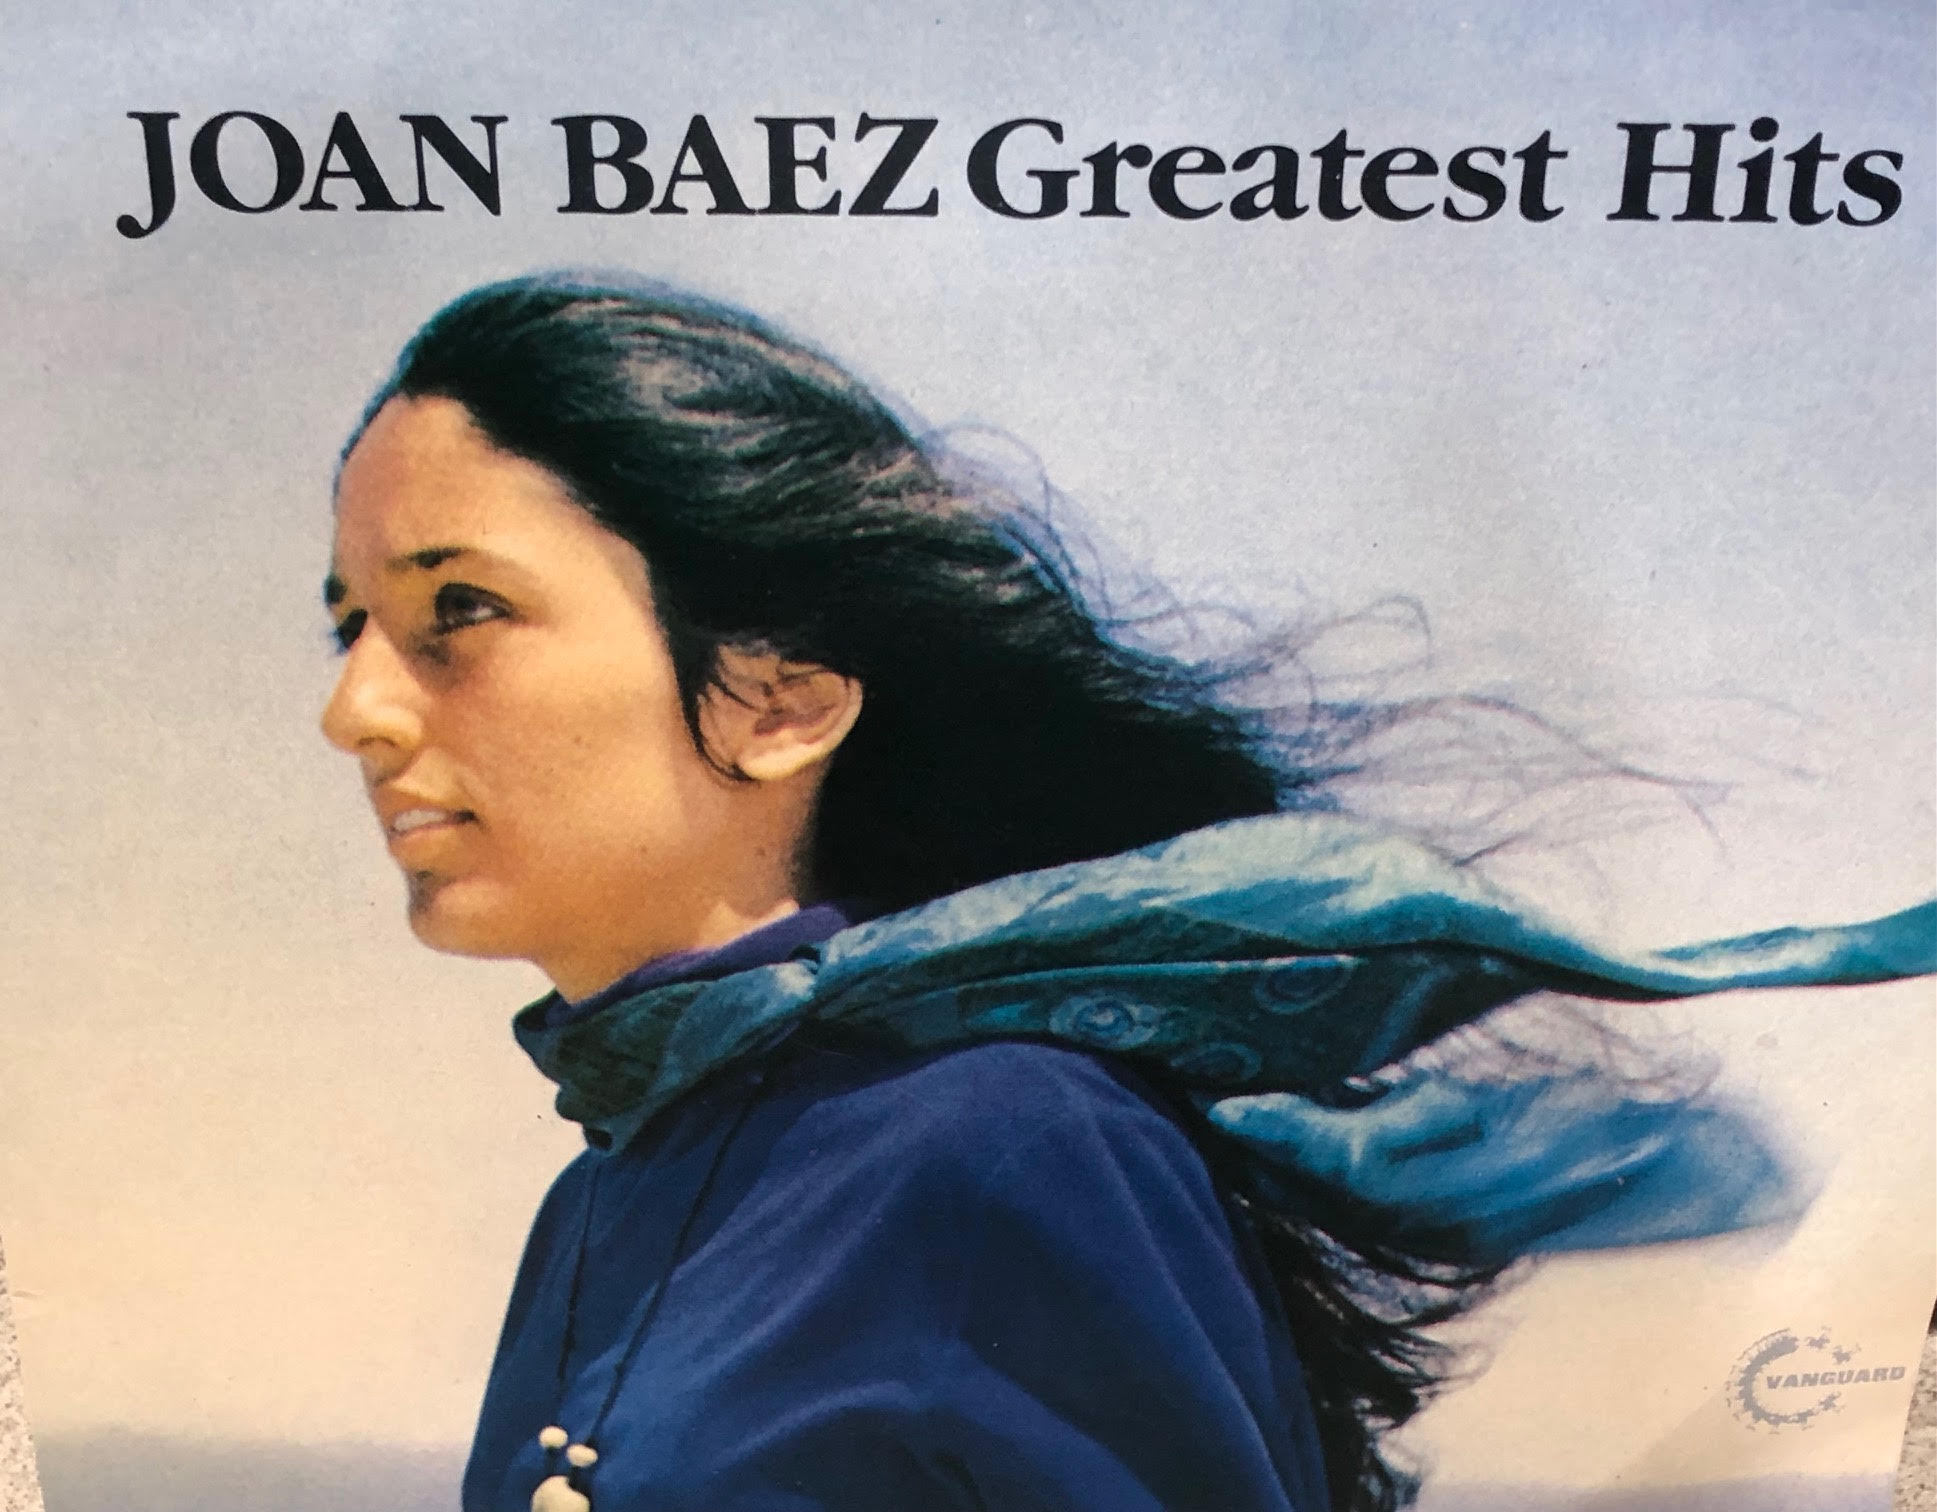 JOAN BAEZ - GREATEST HITS - VINYL LP - Wah Wah Records